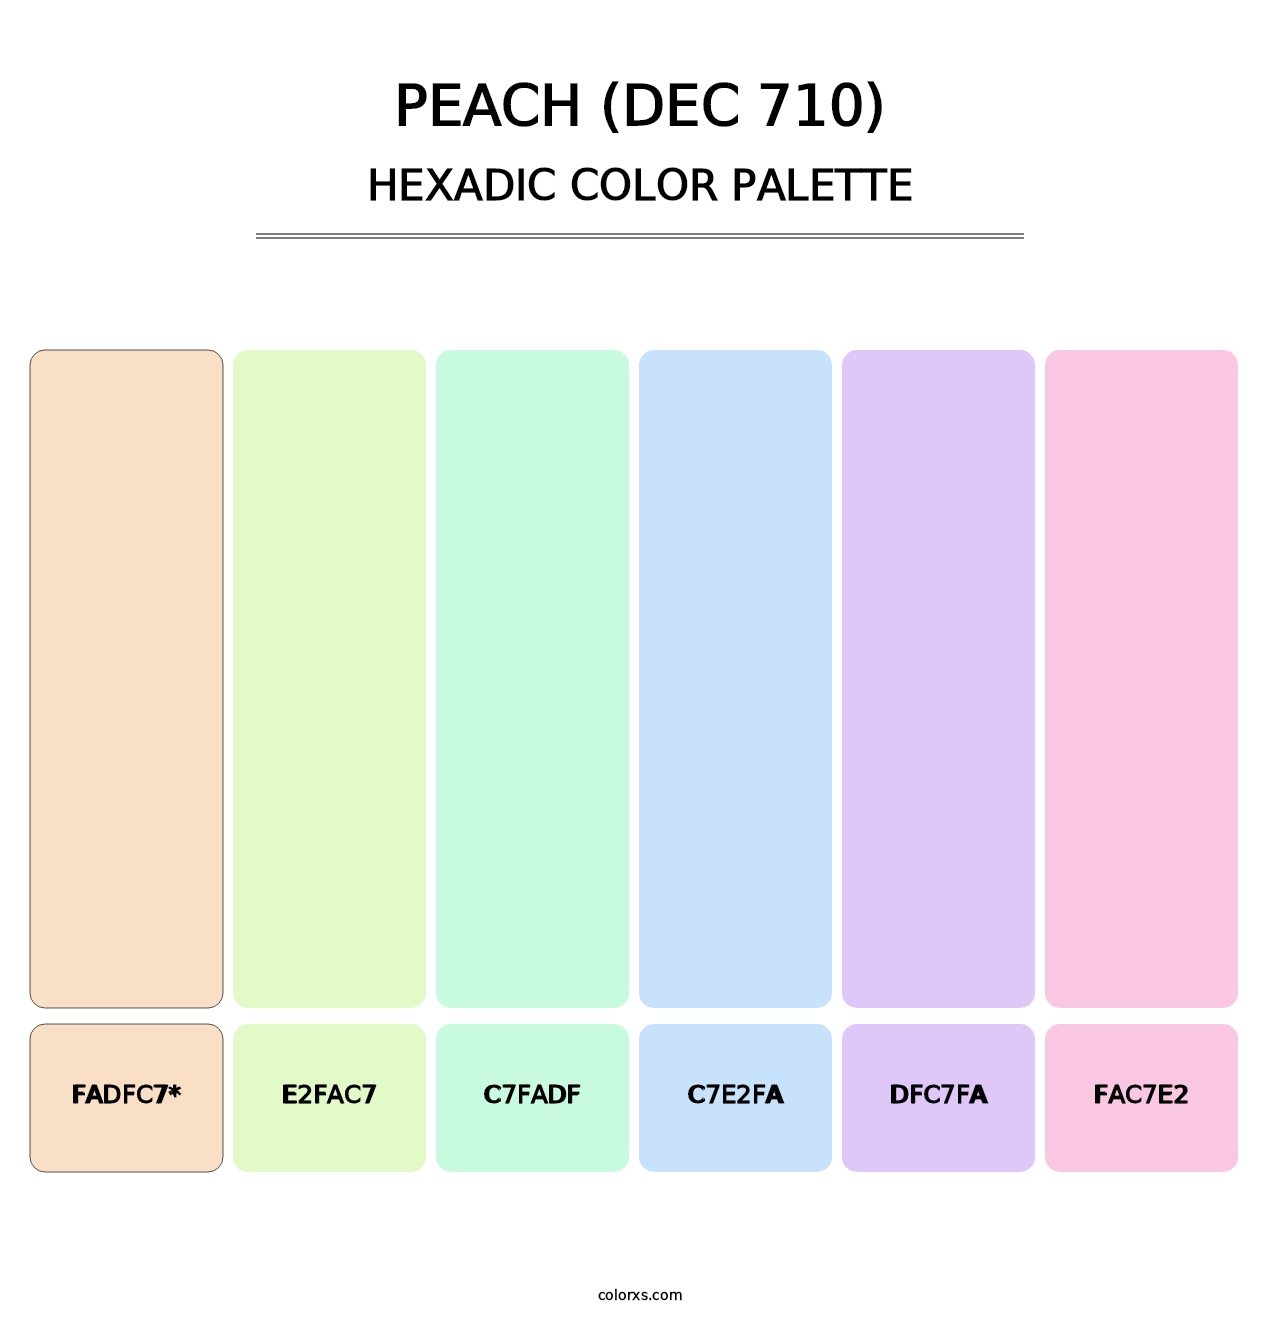 Peach (DEC 710) - Hexadic Color Palette